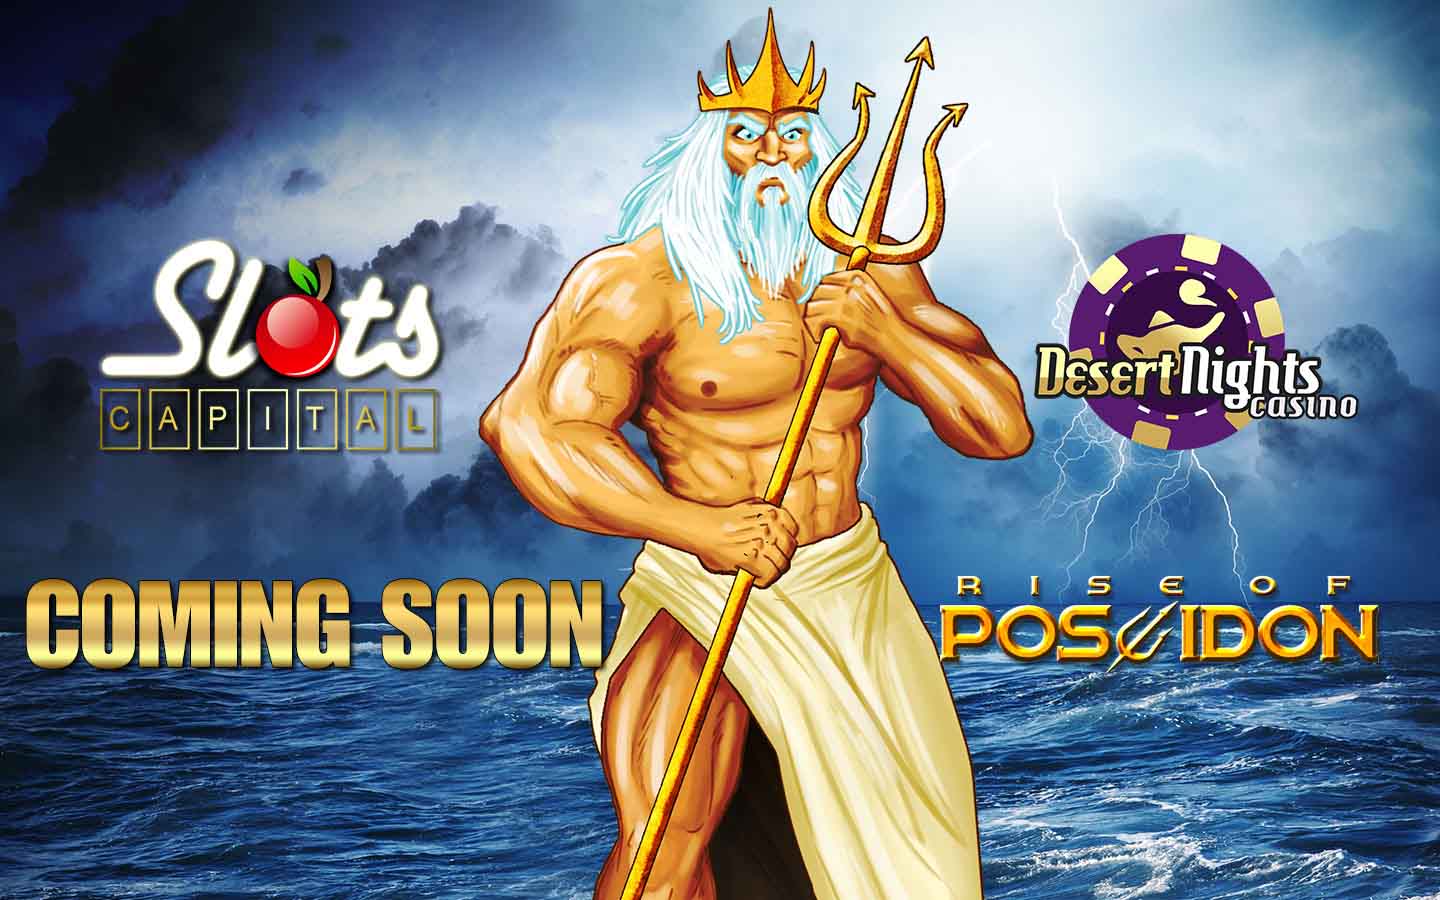 Rise of Poseidon bonuses at Slots Capital and Desert Nights casino